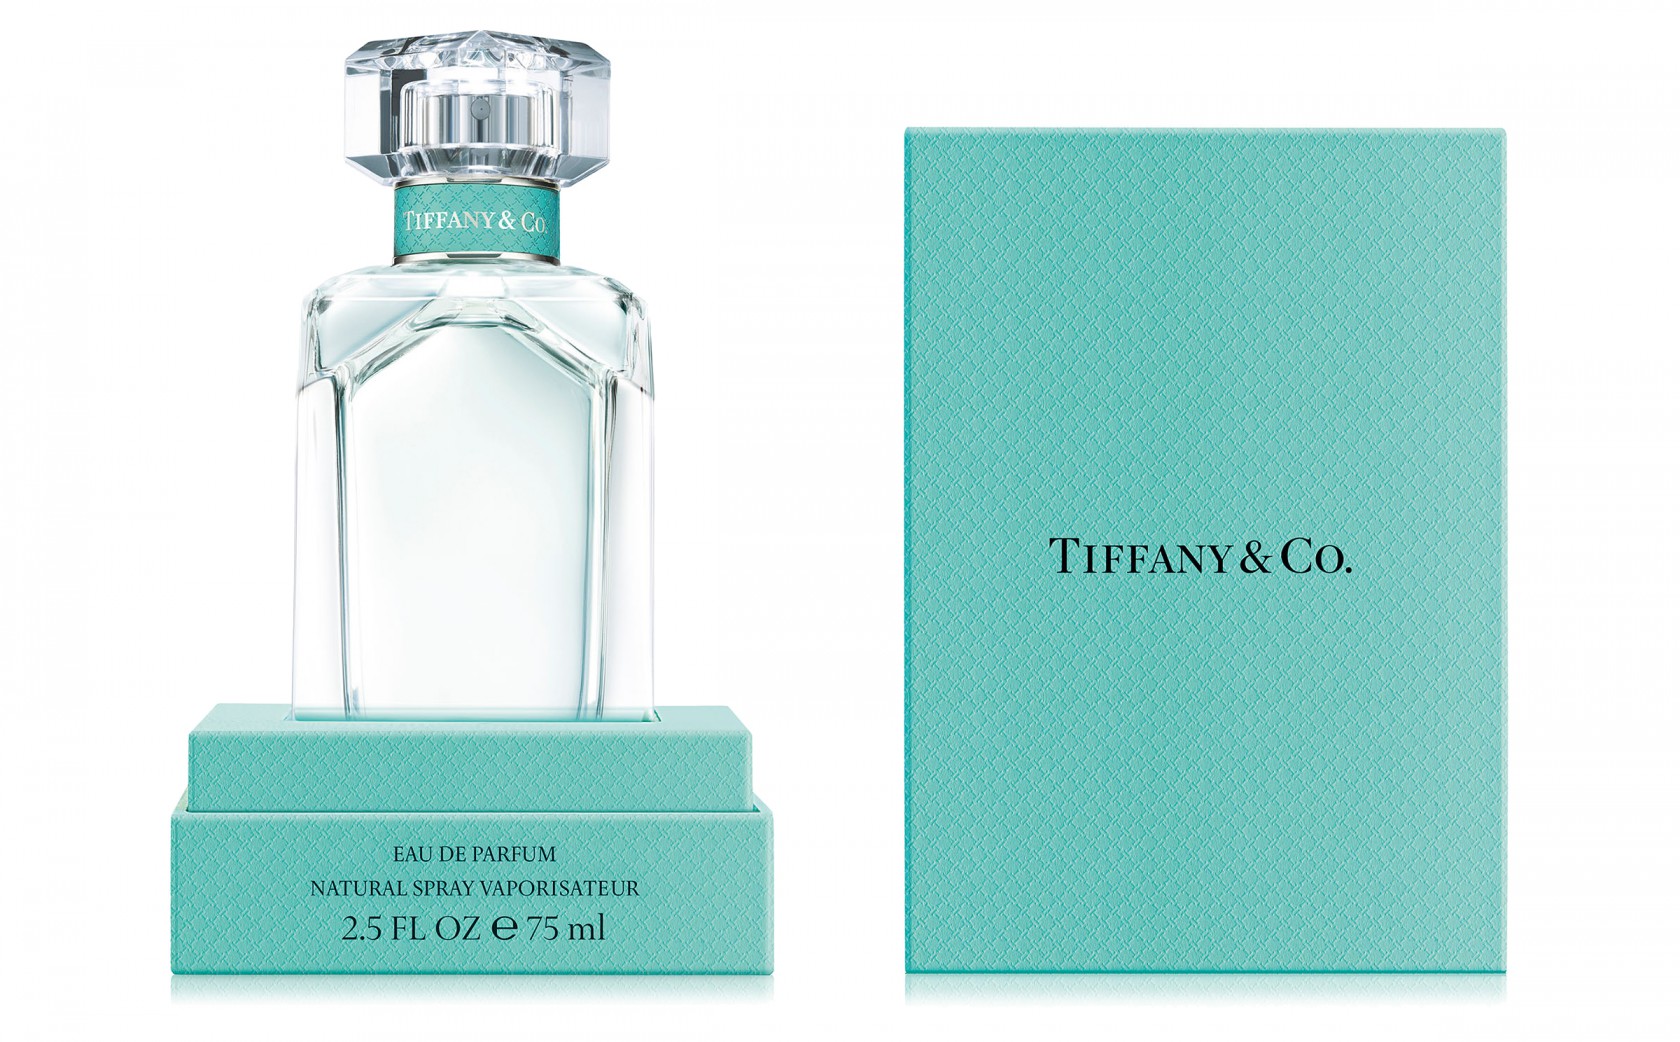 Тиффани де. Тиффани энд ко духи. Духи Тиффани Роуз 30 мл. Tiffany co Limited Edition Eau de Parfum. Tiffany & co Eau de Parfum w 75ml Luxe.